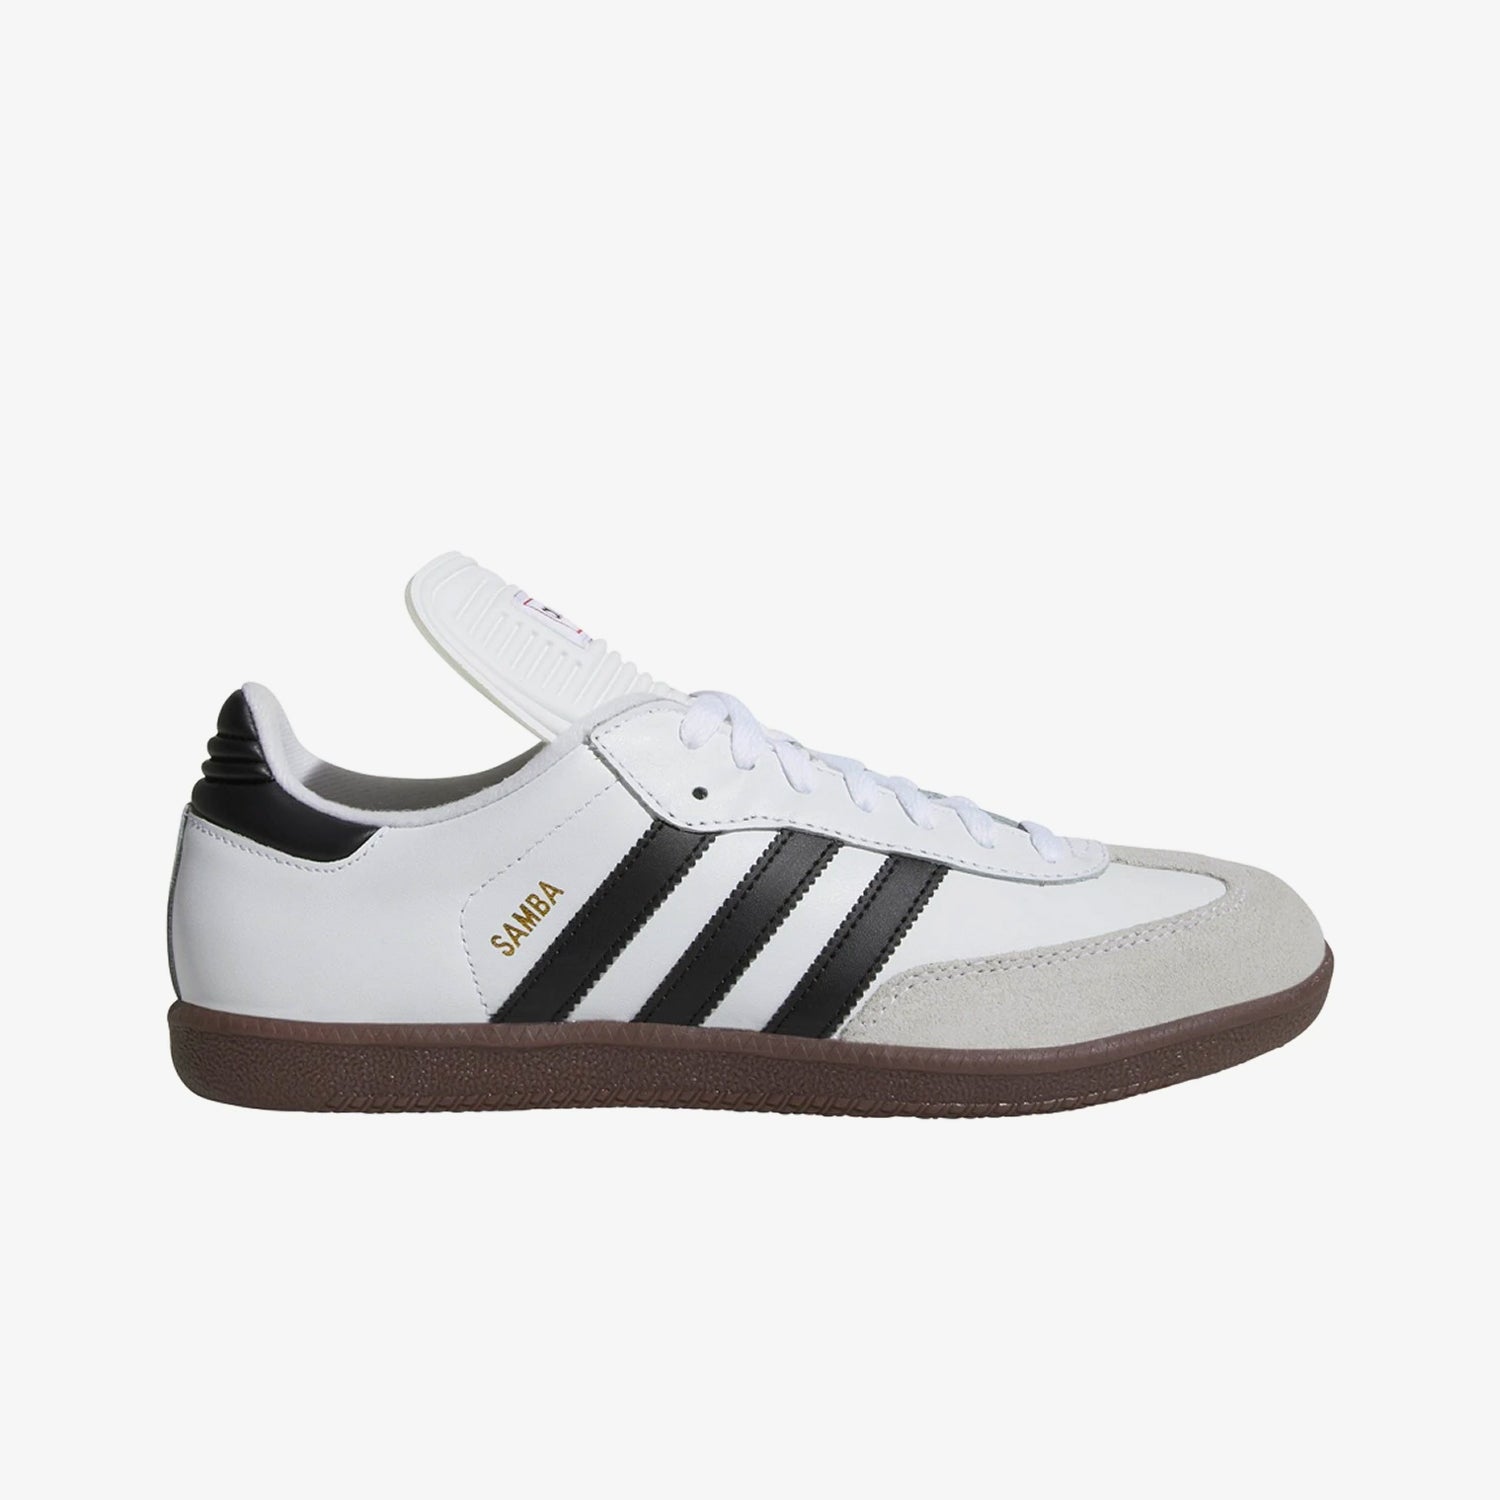 adidas Samba Classic Indoor Soccer Shoes White Men's